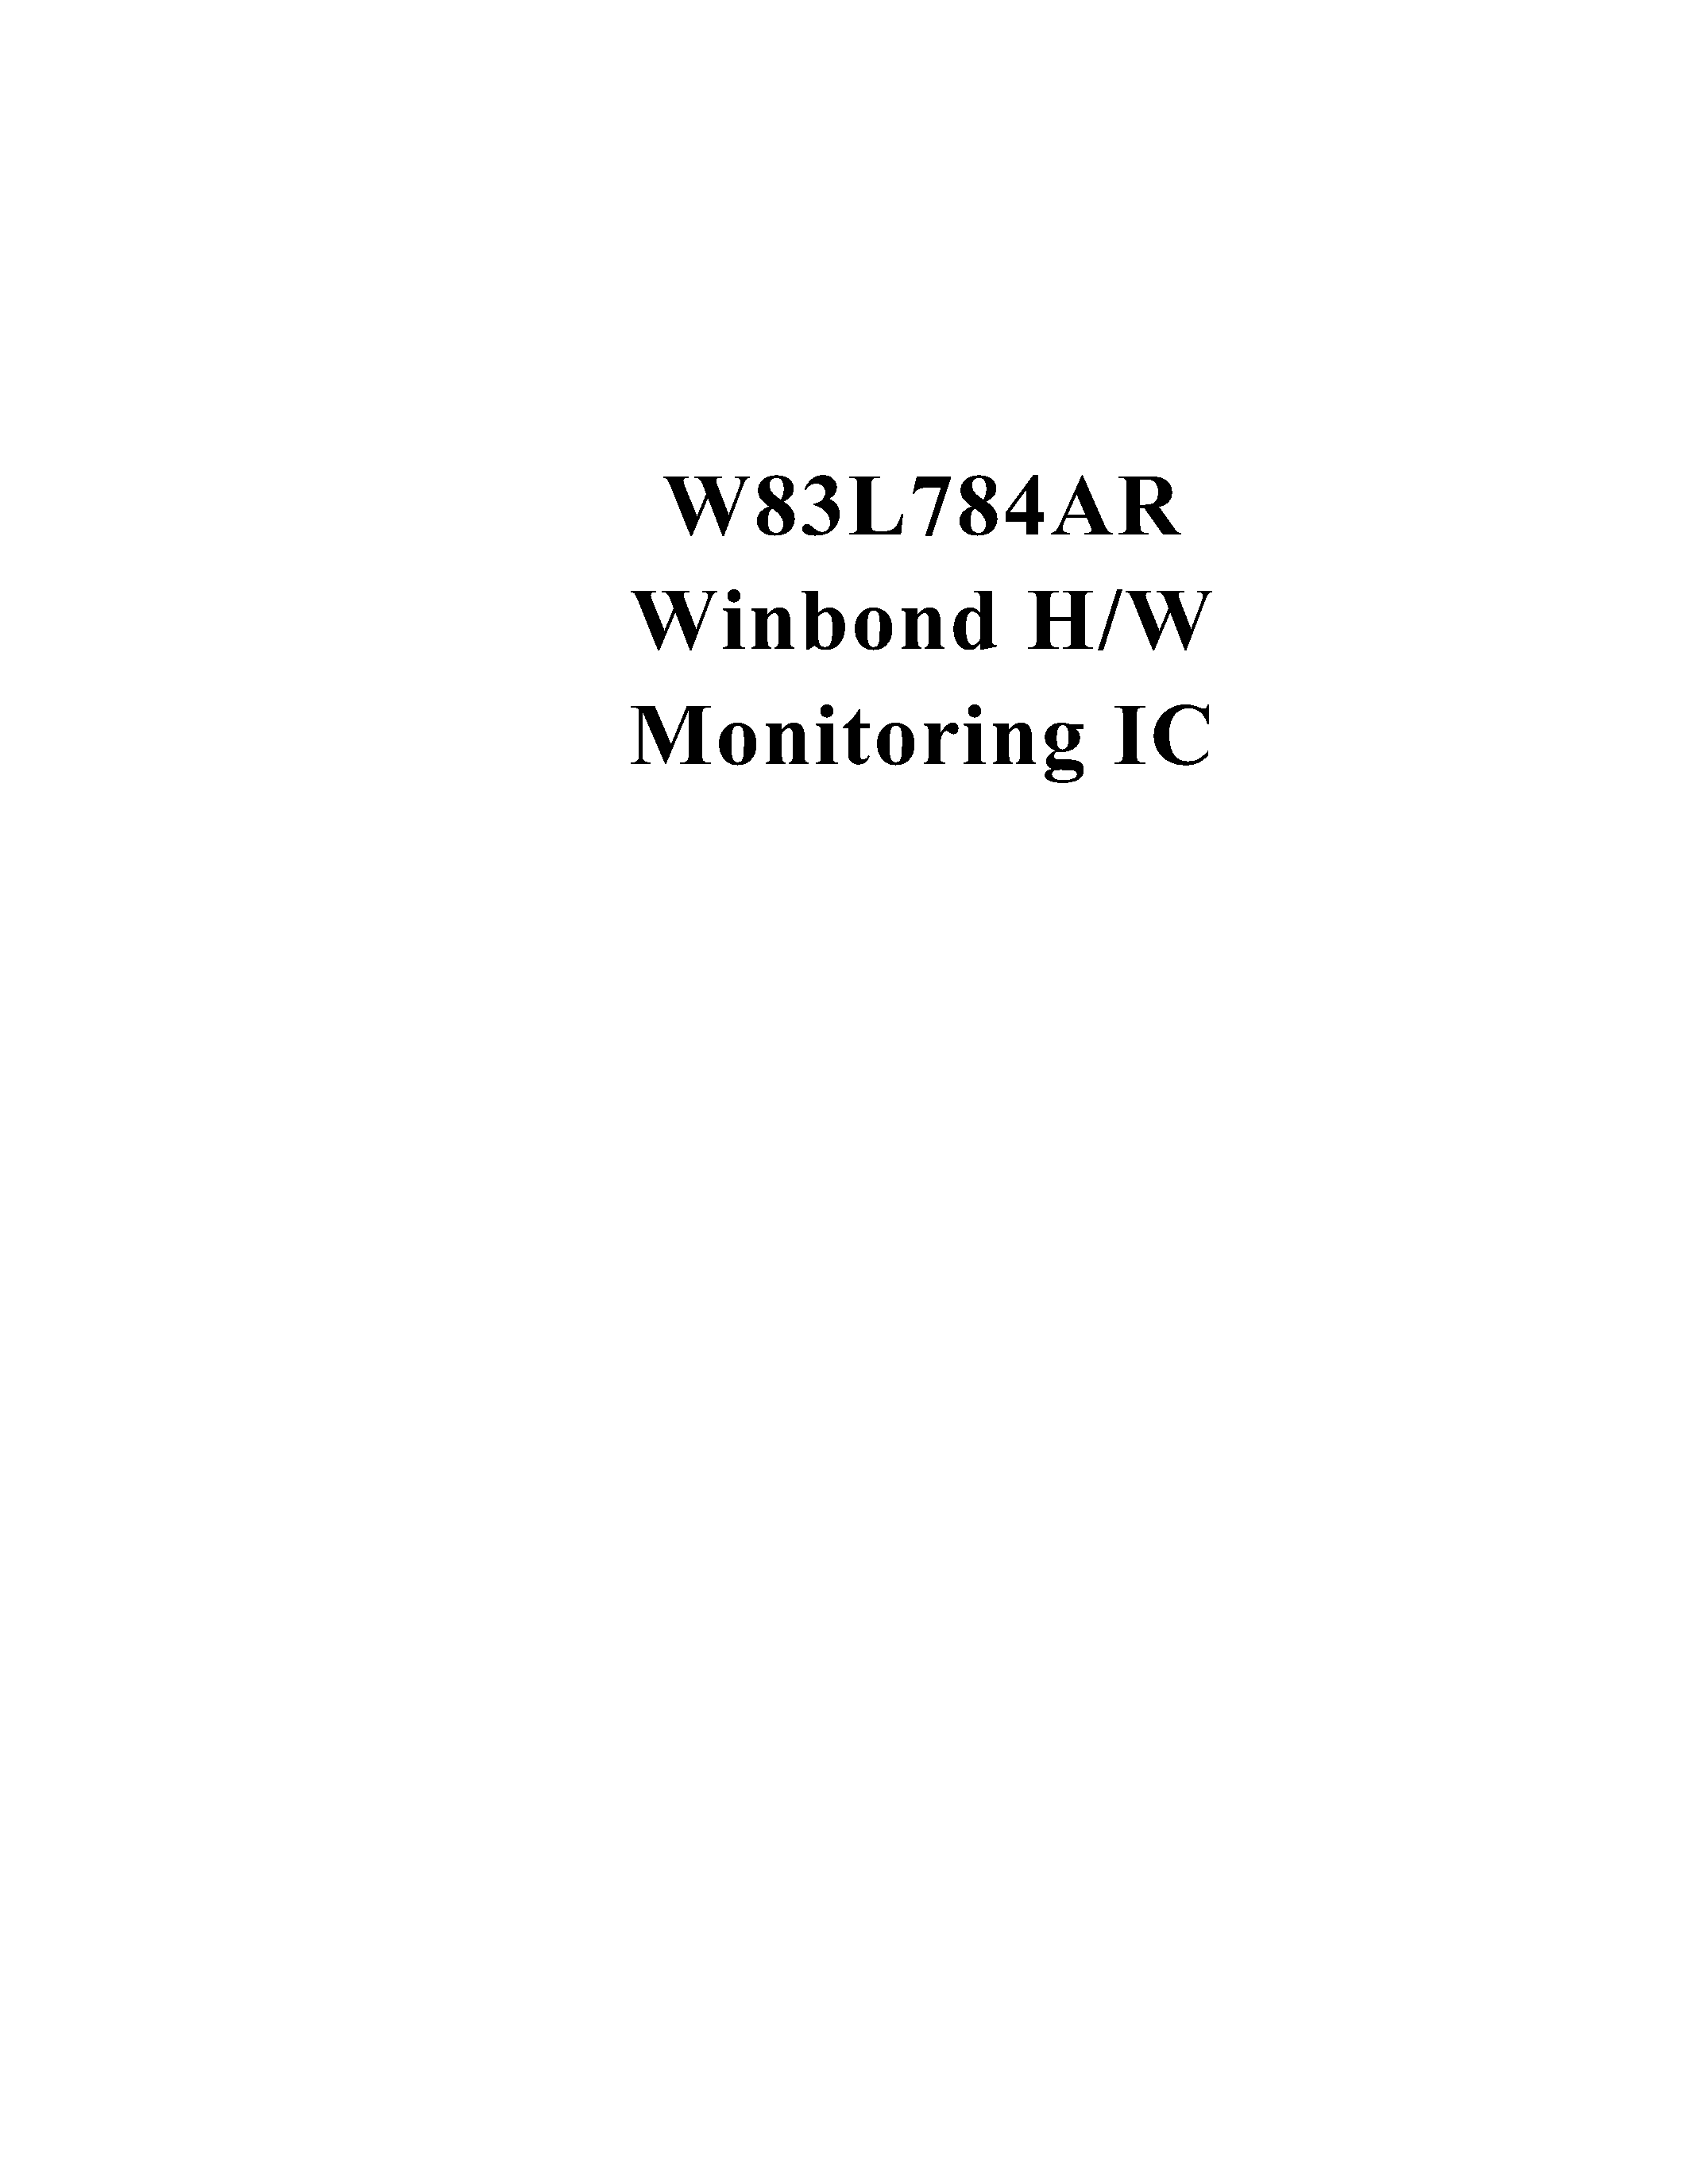 Datasheet W83L784AR - WINBOND H/W MONITORING IC page 1